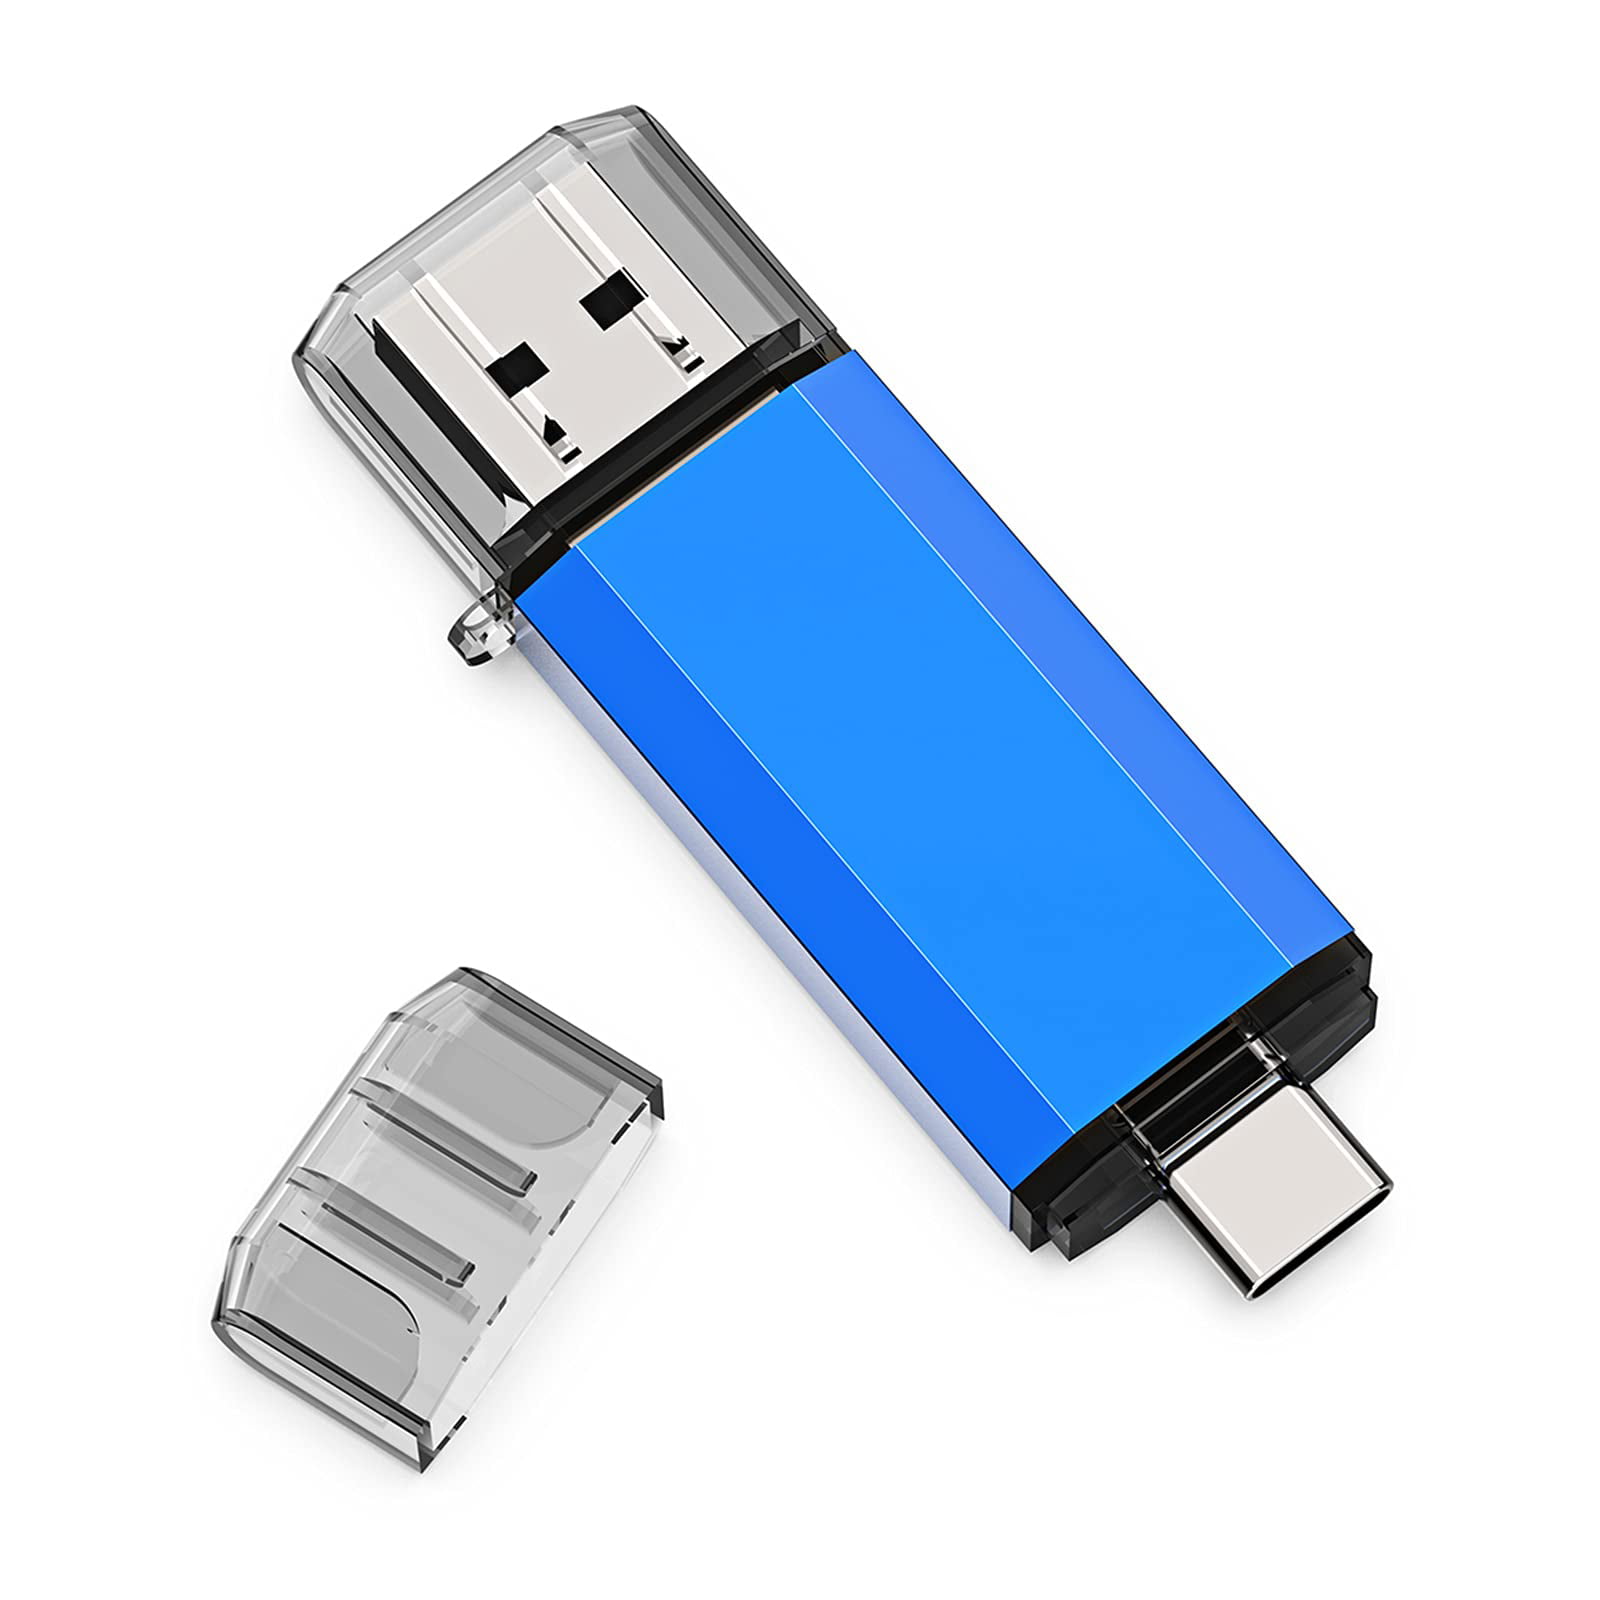 128GB USB C Drive, 2 in 1 OTG USB 3.0 + USB C Memory Stick Dual Type C USB Thumb Drive Jump Drive Photo Stick for Storage and Backup, Blue - Walmart.com